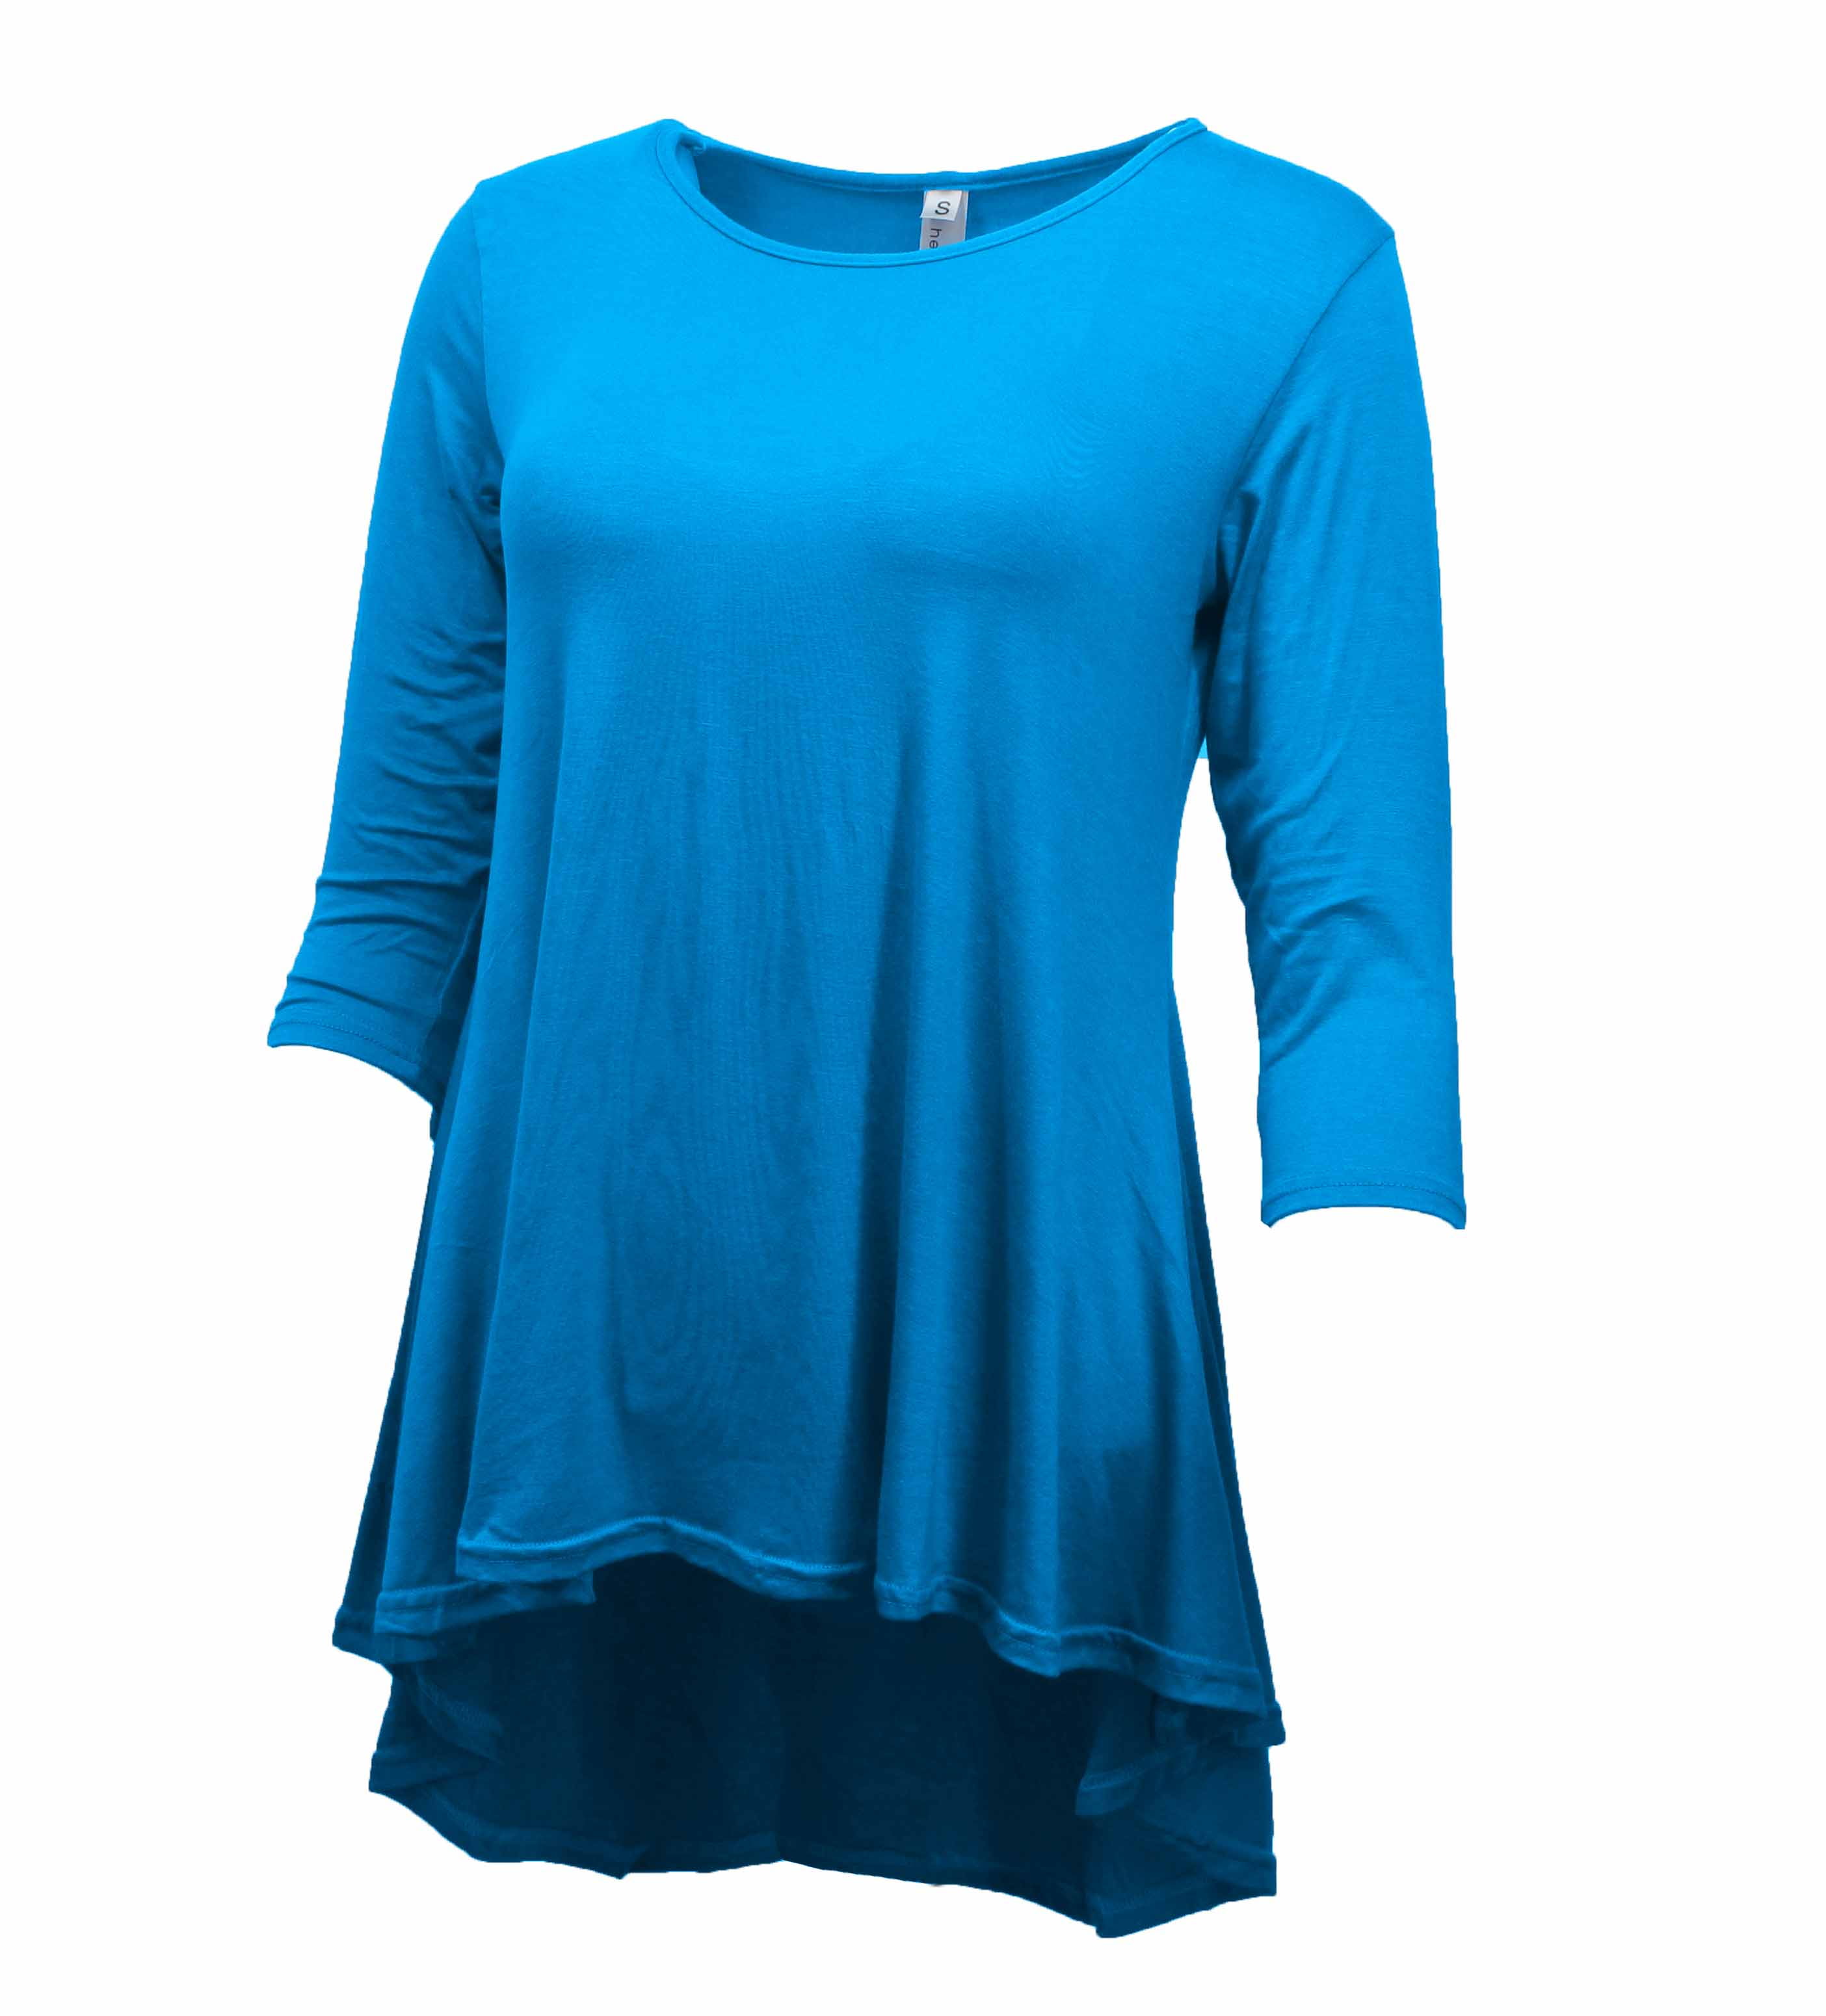 Heathmoor Womens 3/4 Sleeve Swing Tunic Top (Turquoise, Medium ...